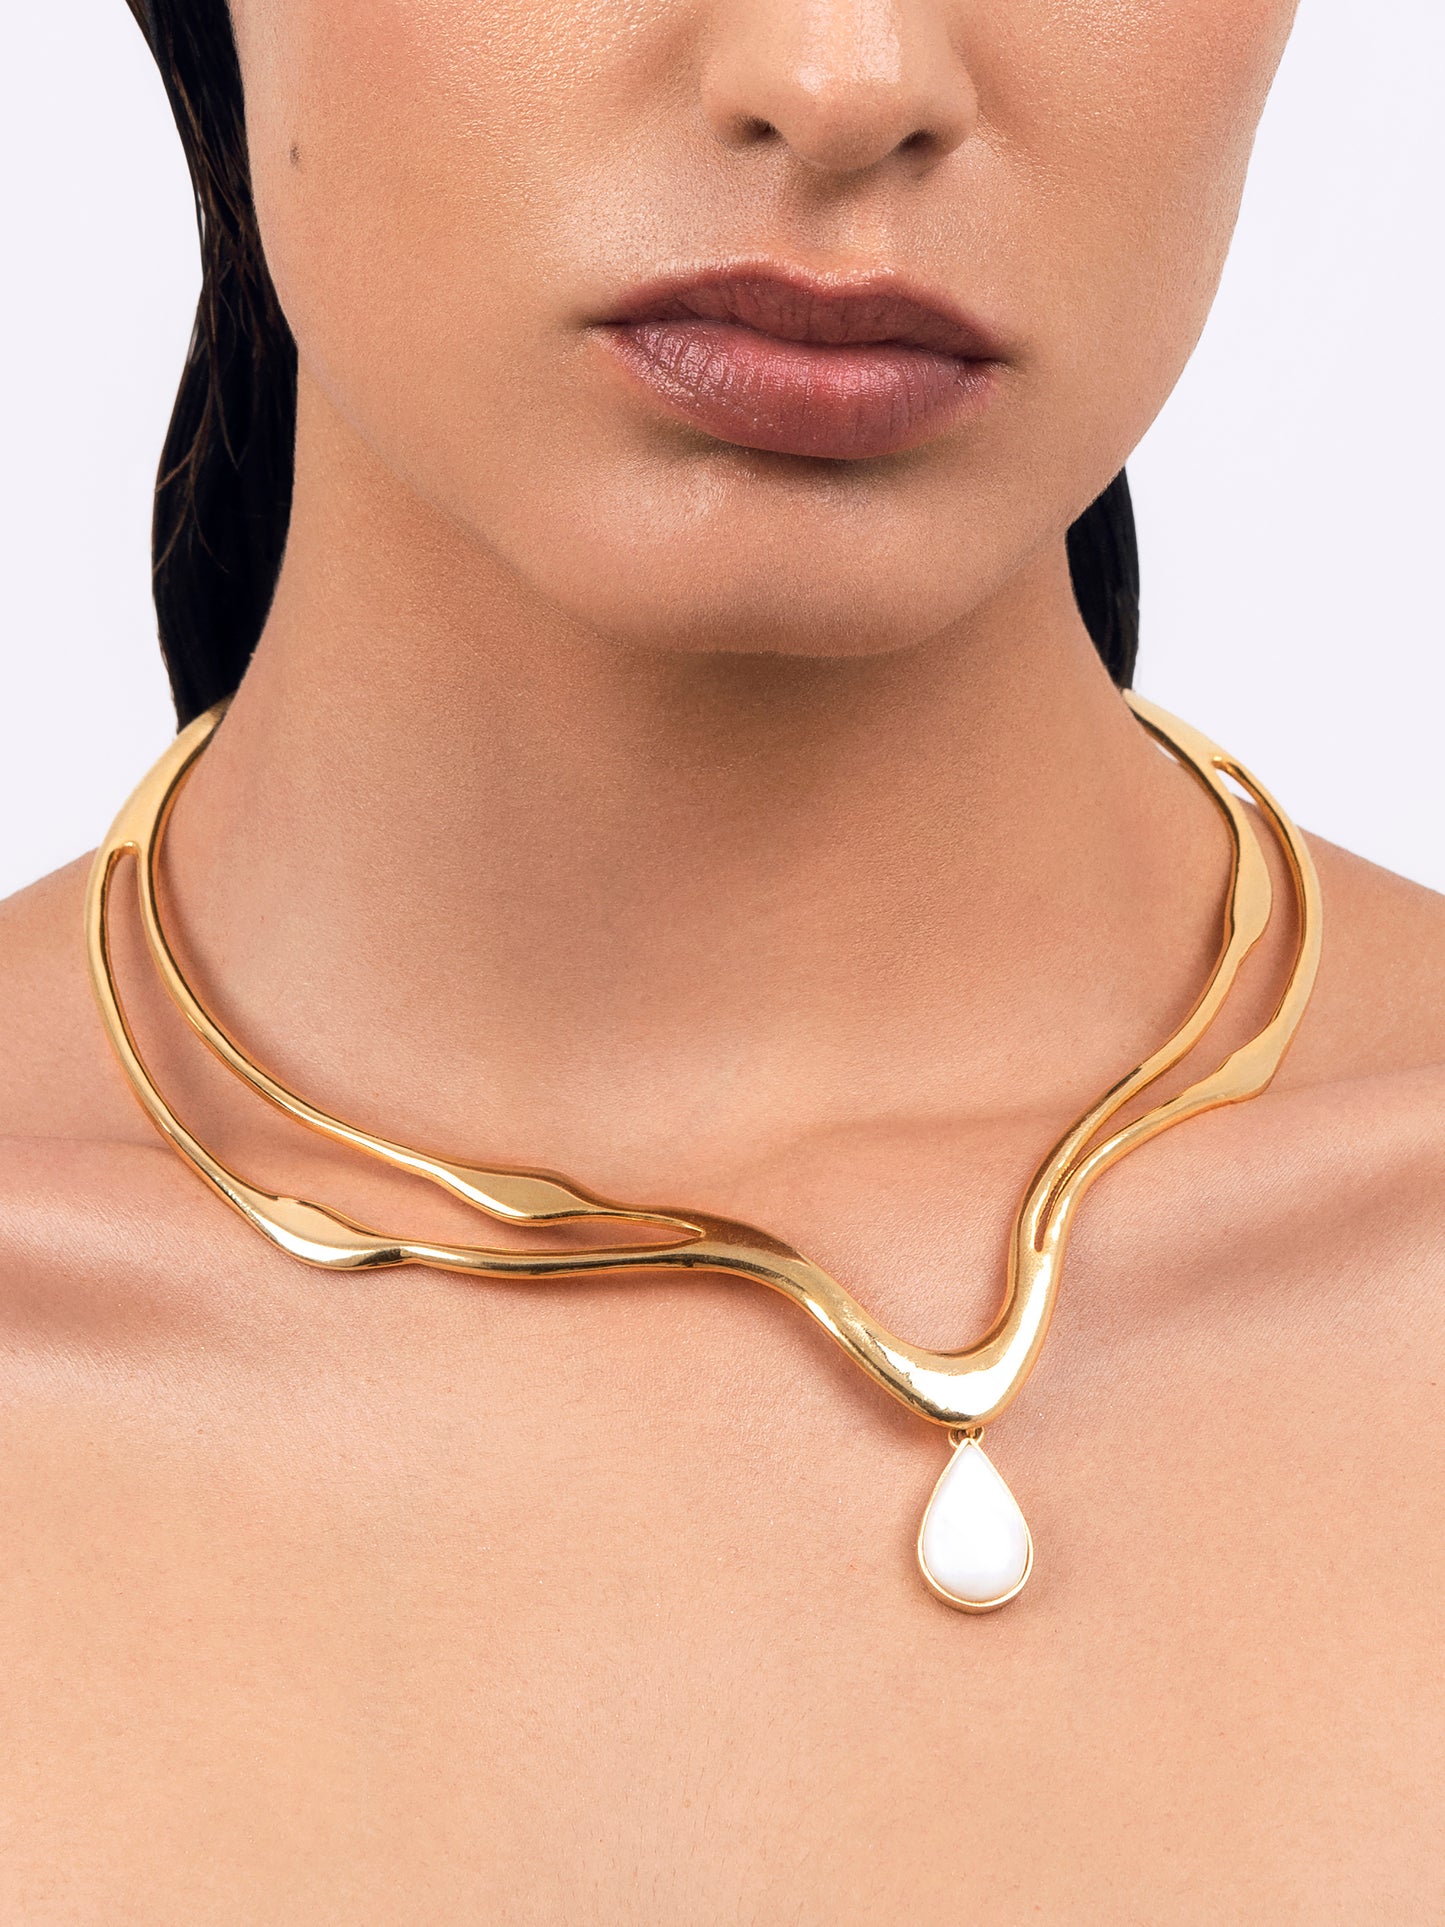 Nectar choker necklace